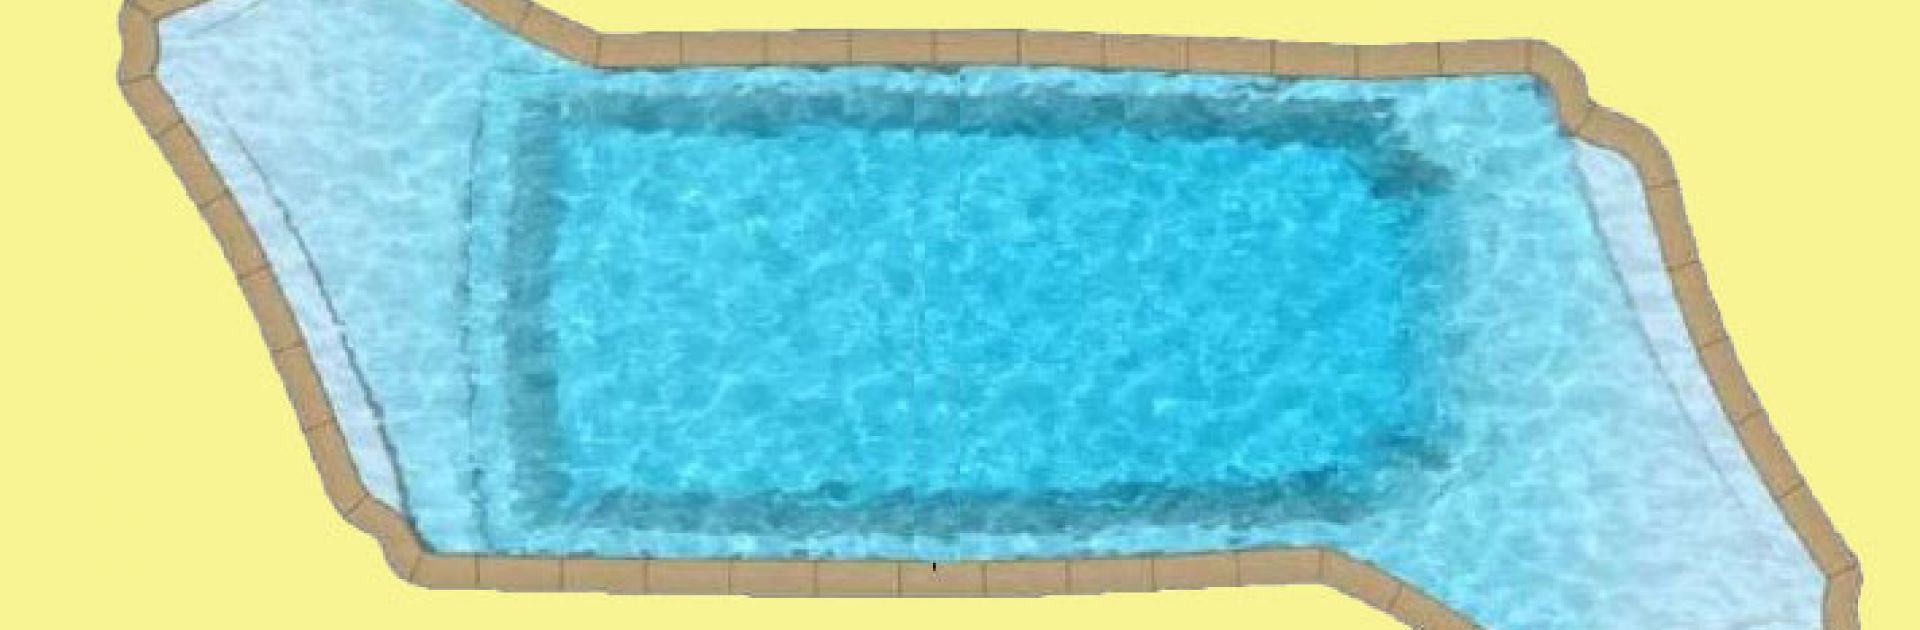 Indoor pool spa covered dordogne